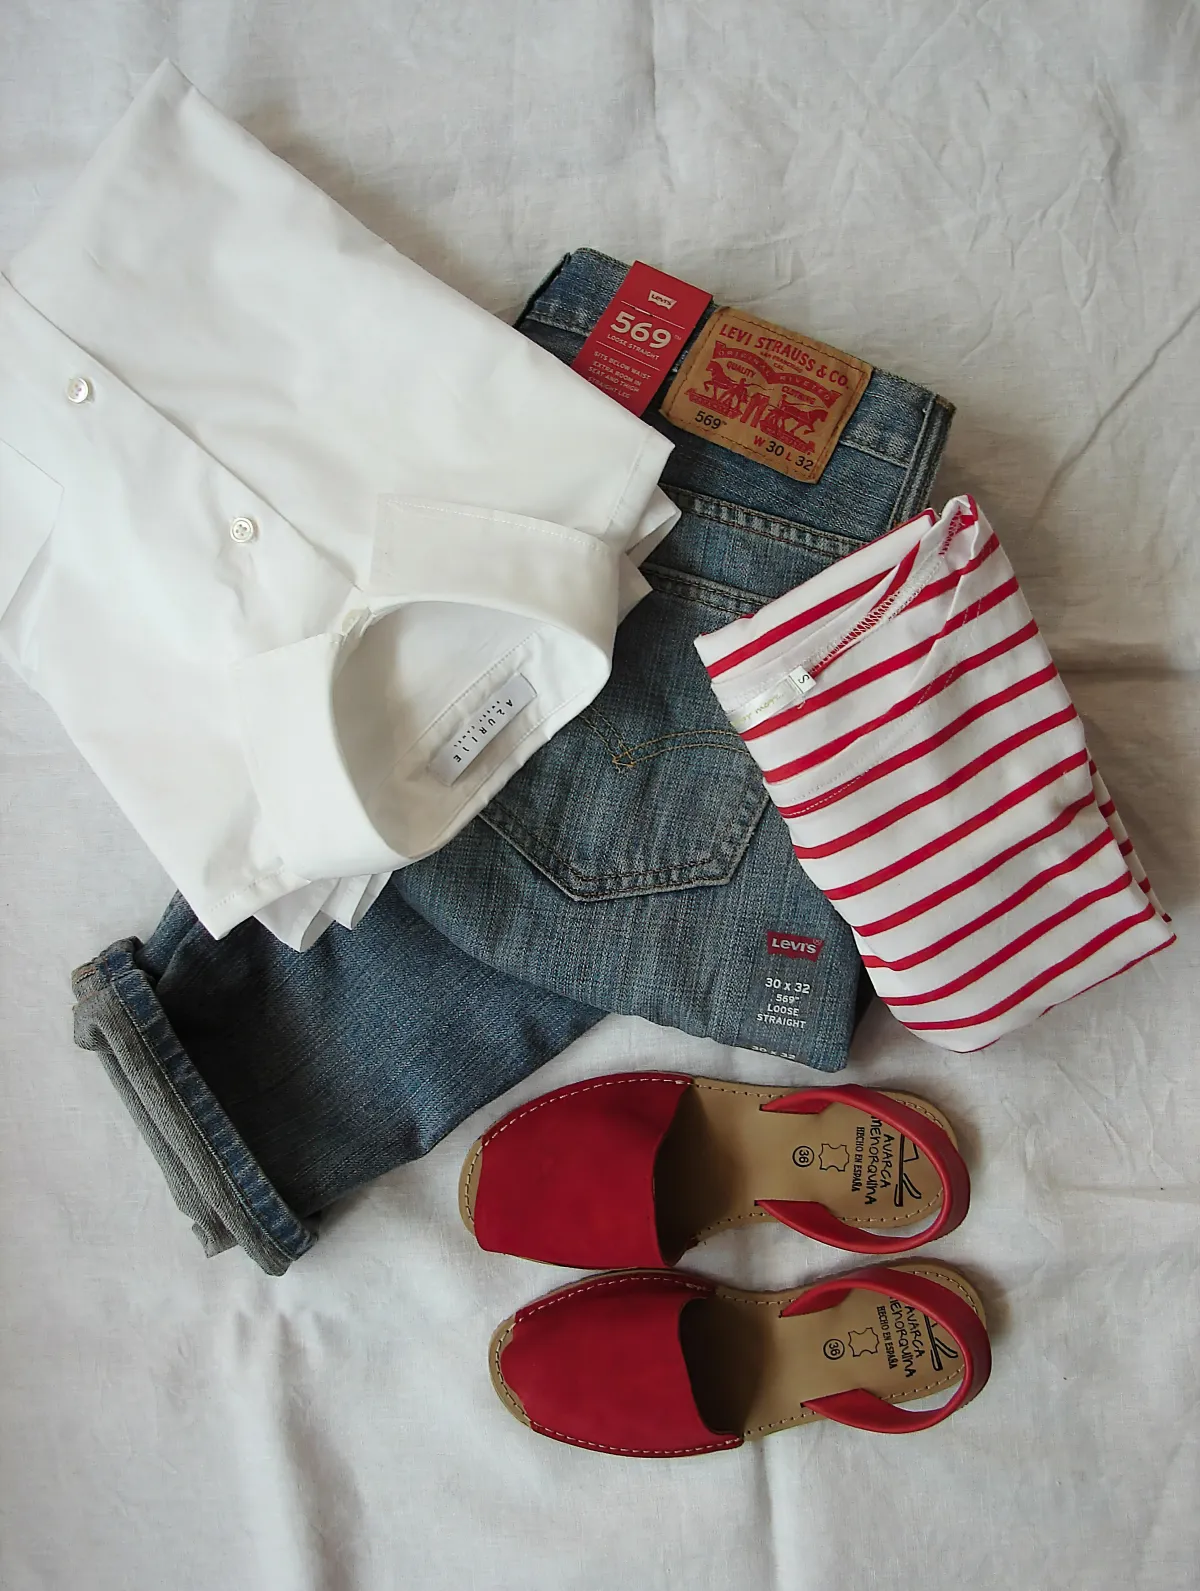 textil großhandel mit accessoires outfit aufpeppen jeans rote schuhe